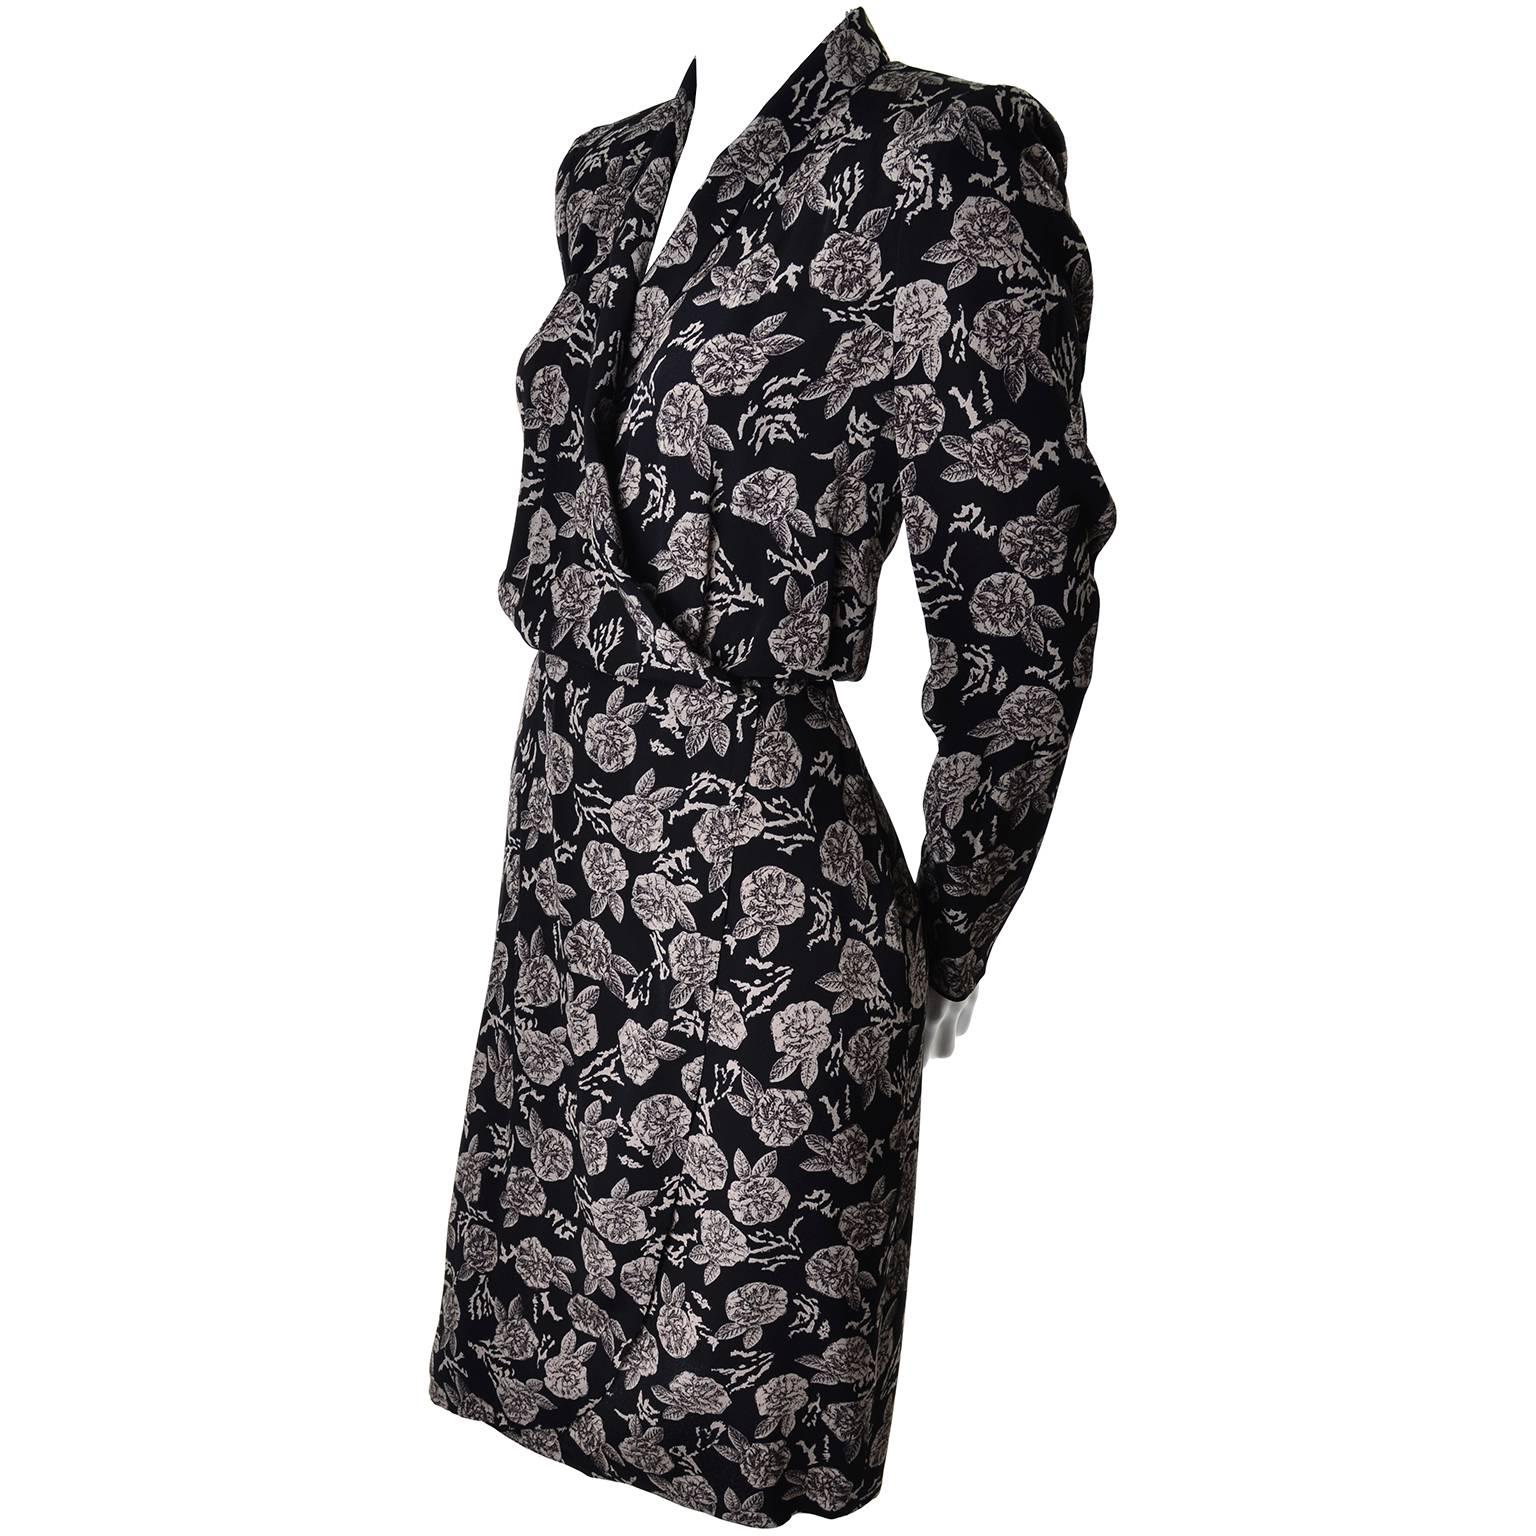 Sonia Rykiel Paris Vintage Floral Wrap Dress Rayon Roses Size 8/10